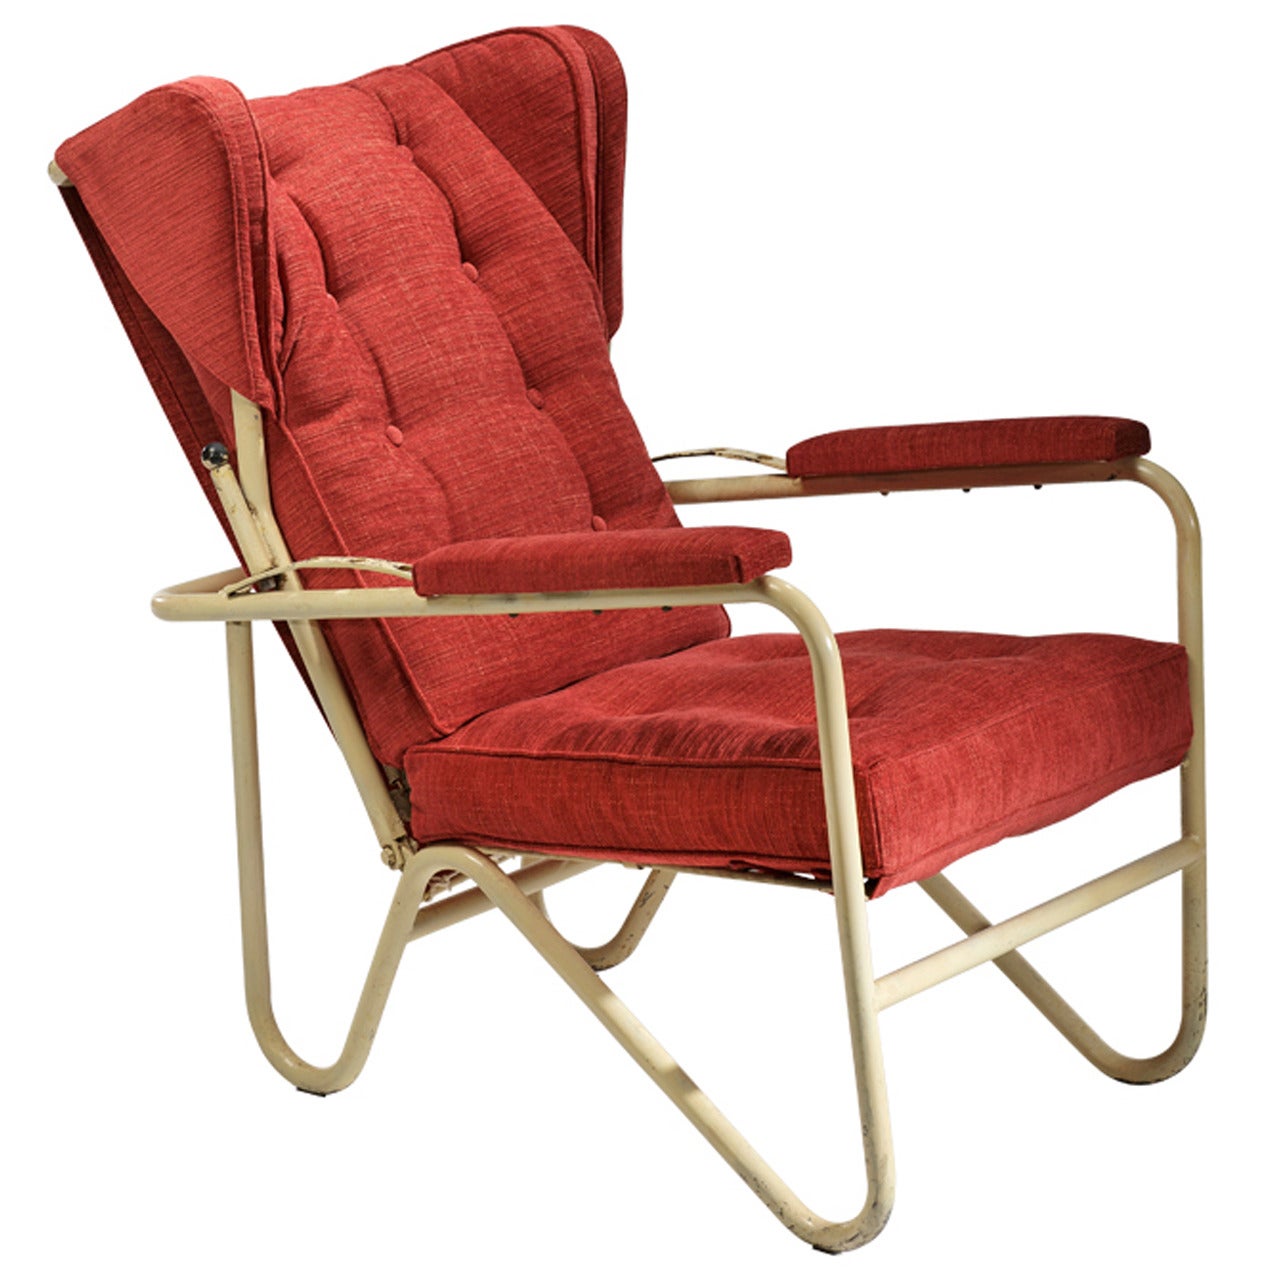 Prefacto Chair by Pierre Guariche, 1951 For Sale